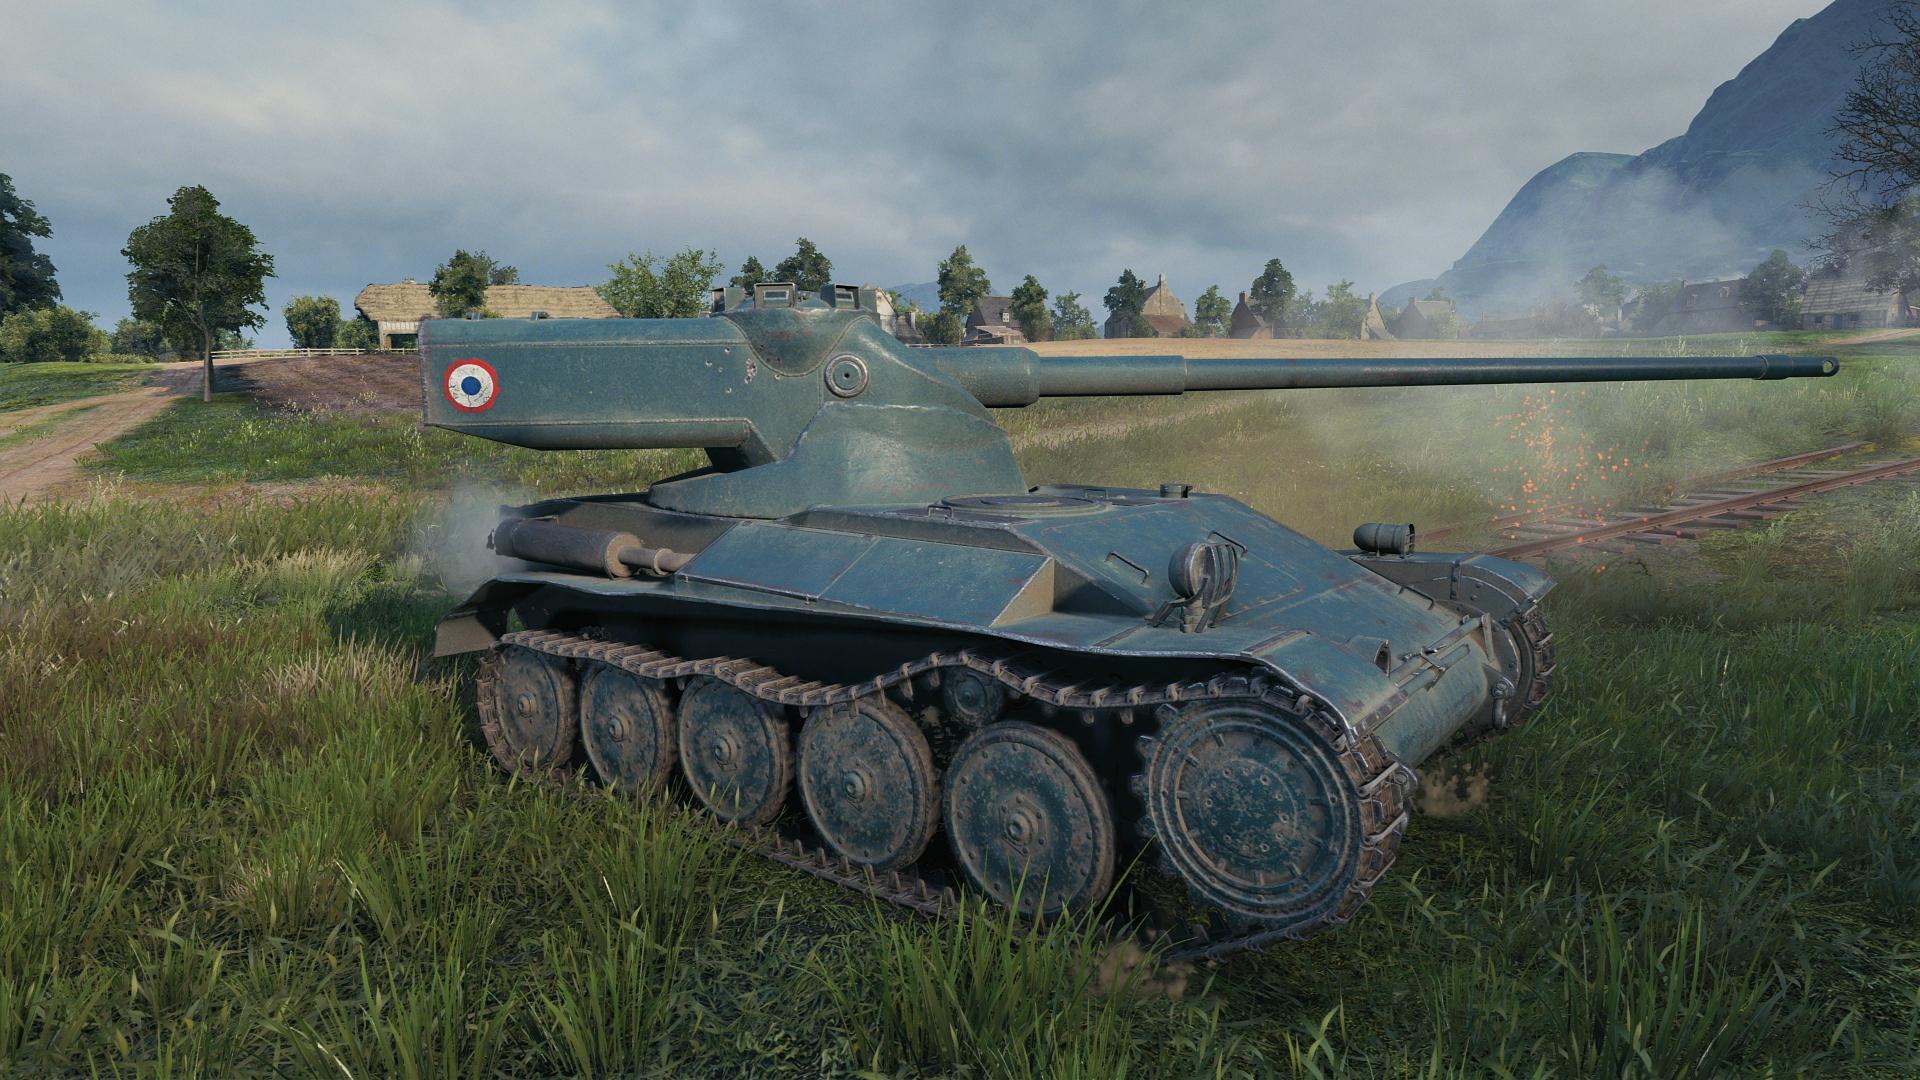 Tanks 13. Французский танк АМХ-13. Танк AMX 13 57. Танк AMX 1390. Легкий танк АМХ-13 (Франция).